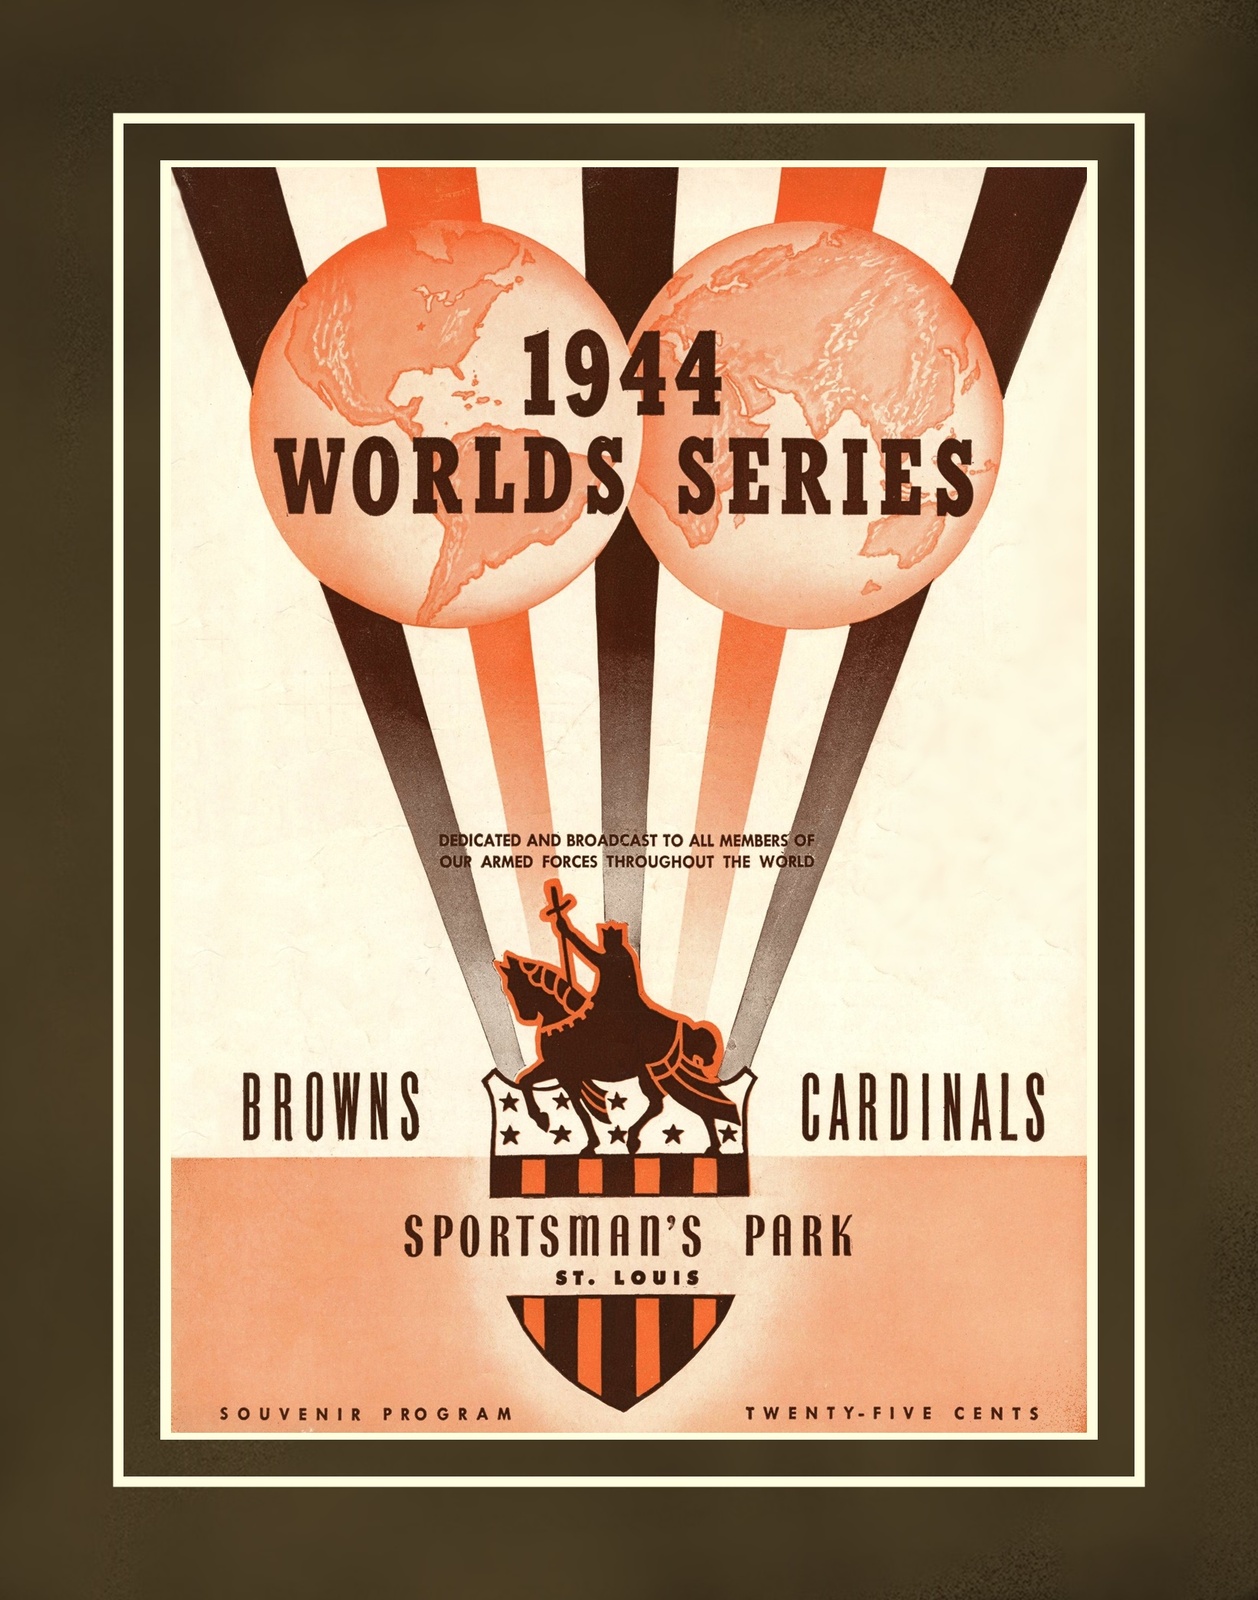 Rare 1944 St Louis Cardinals - Browns World Series Poster Print, Unique Fan Gift - $22.99 - $39.99